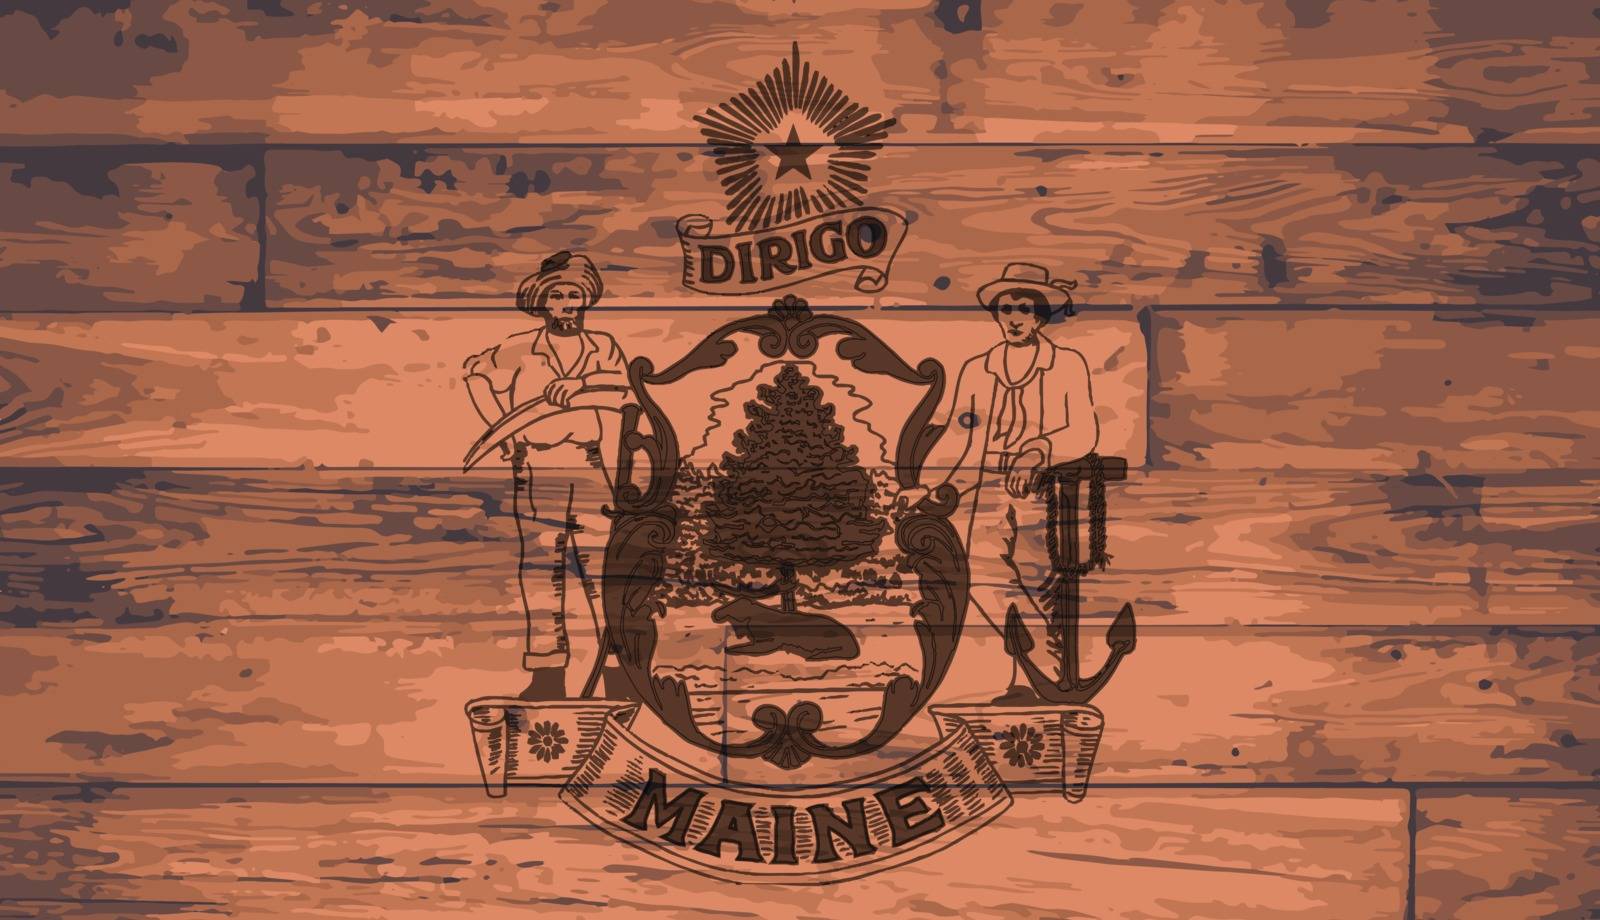 Maine State Flag branded onto wooden planks